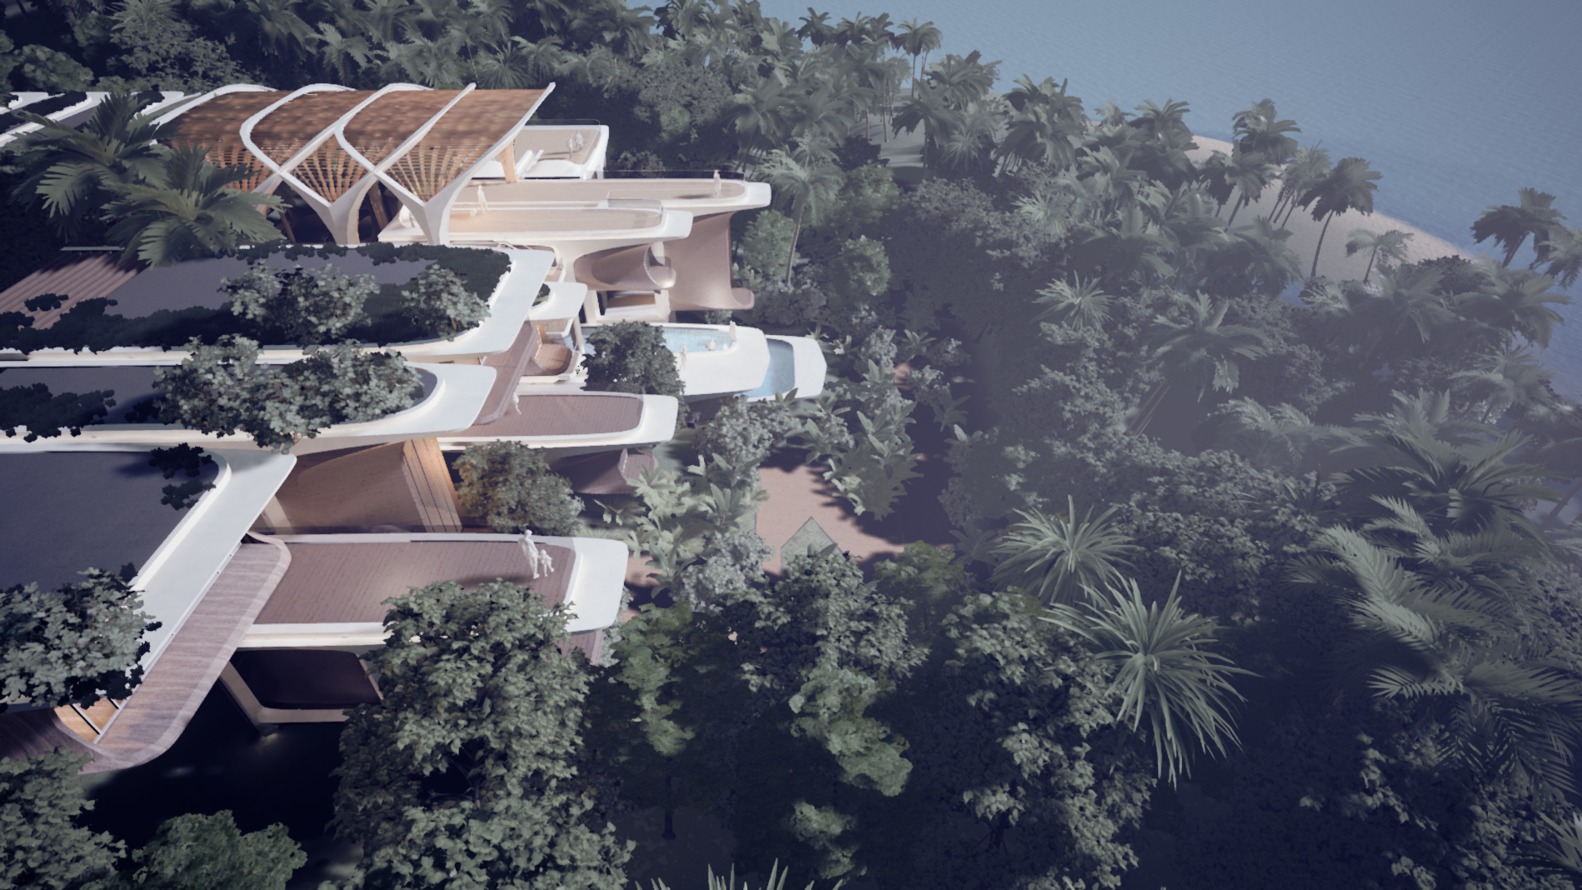 Zaha Hadid Architects Presents The Modular Roatan Prospera Residences